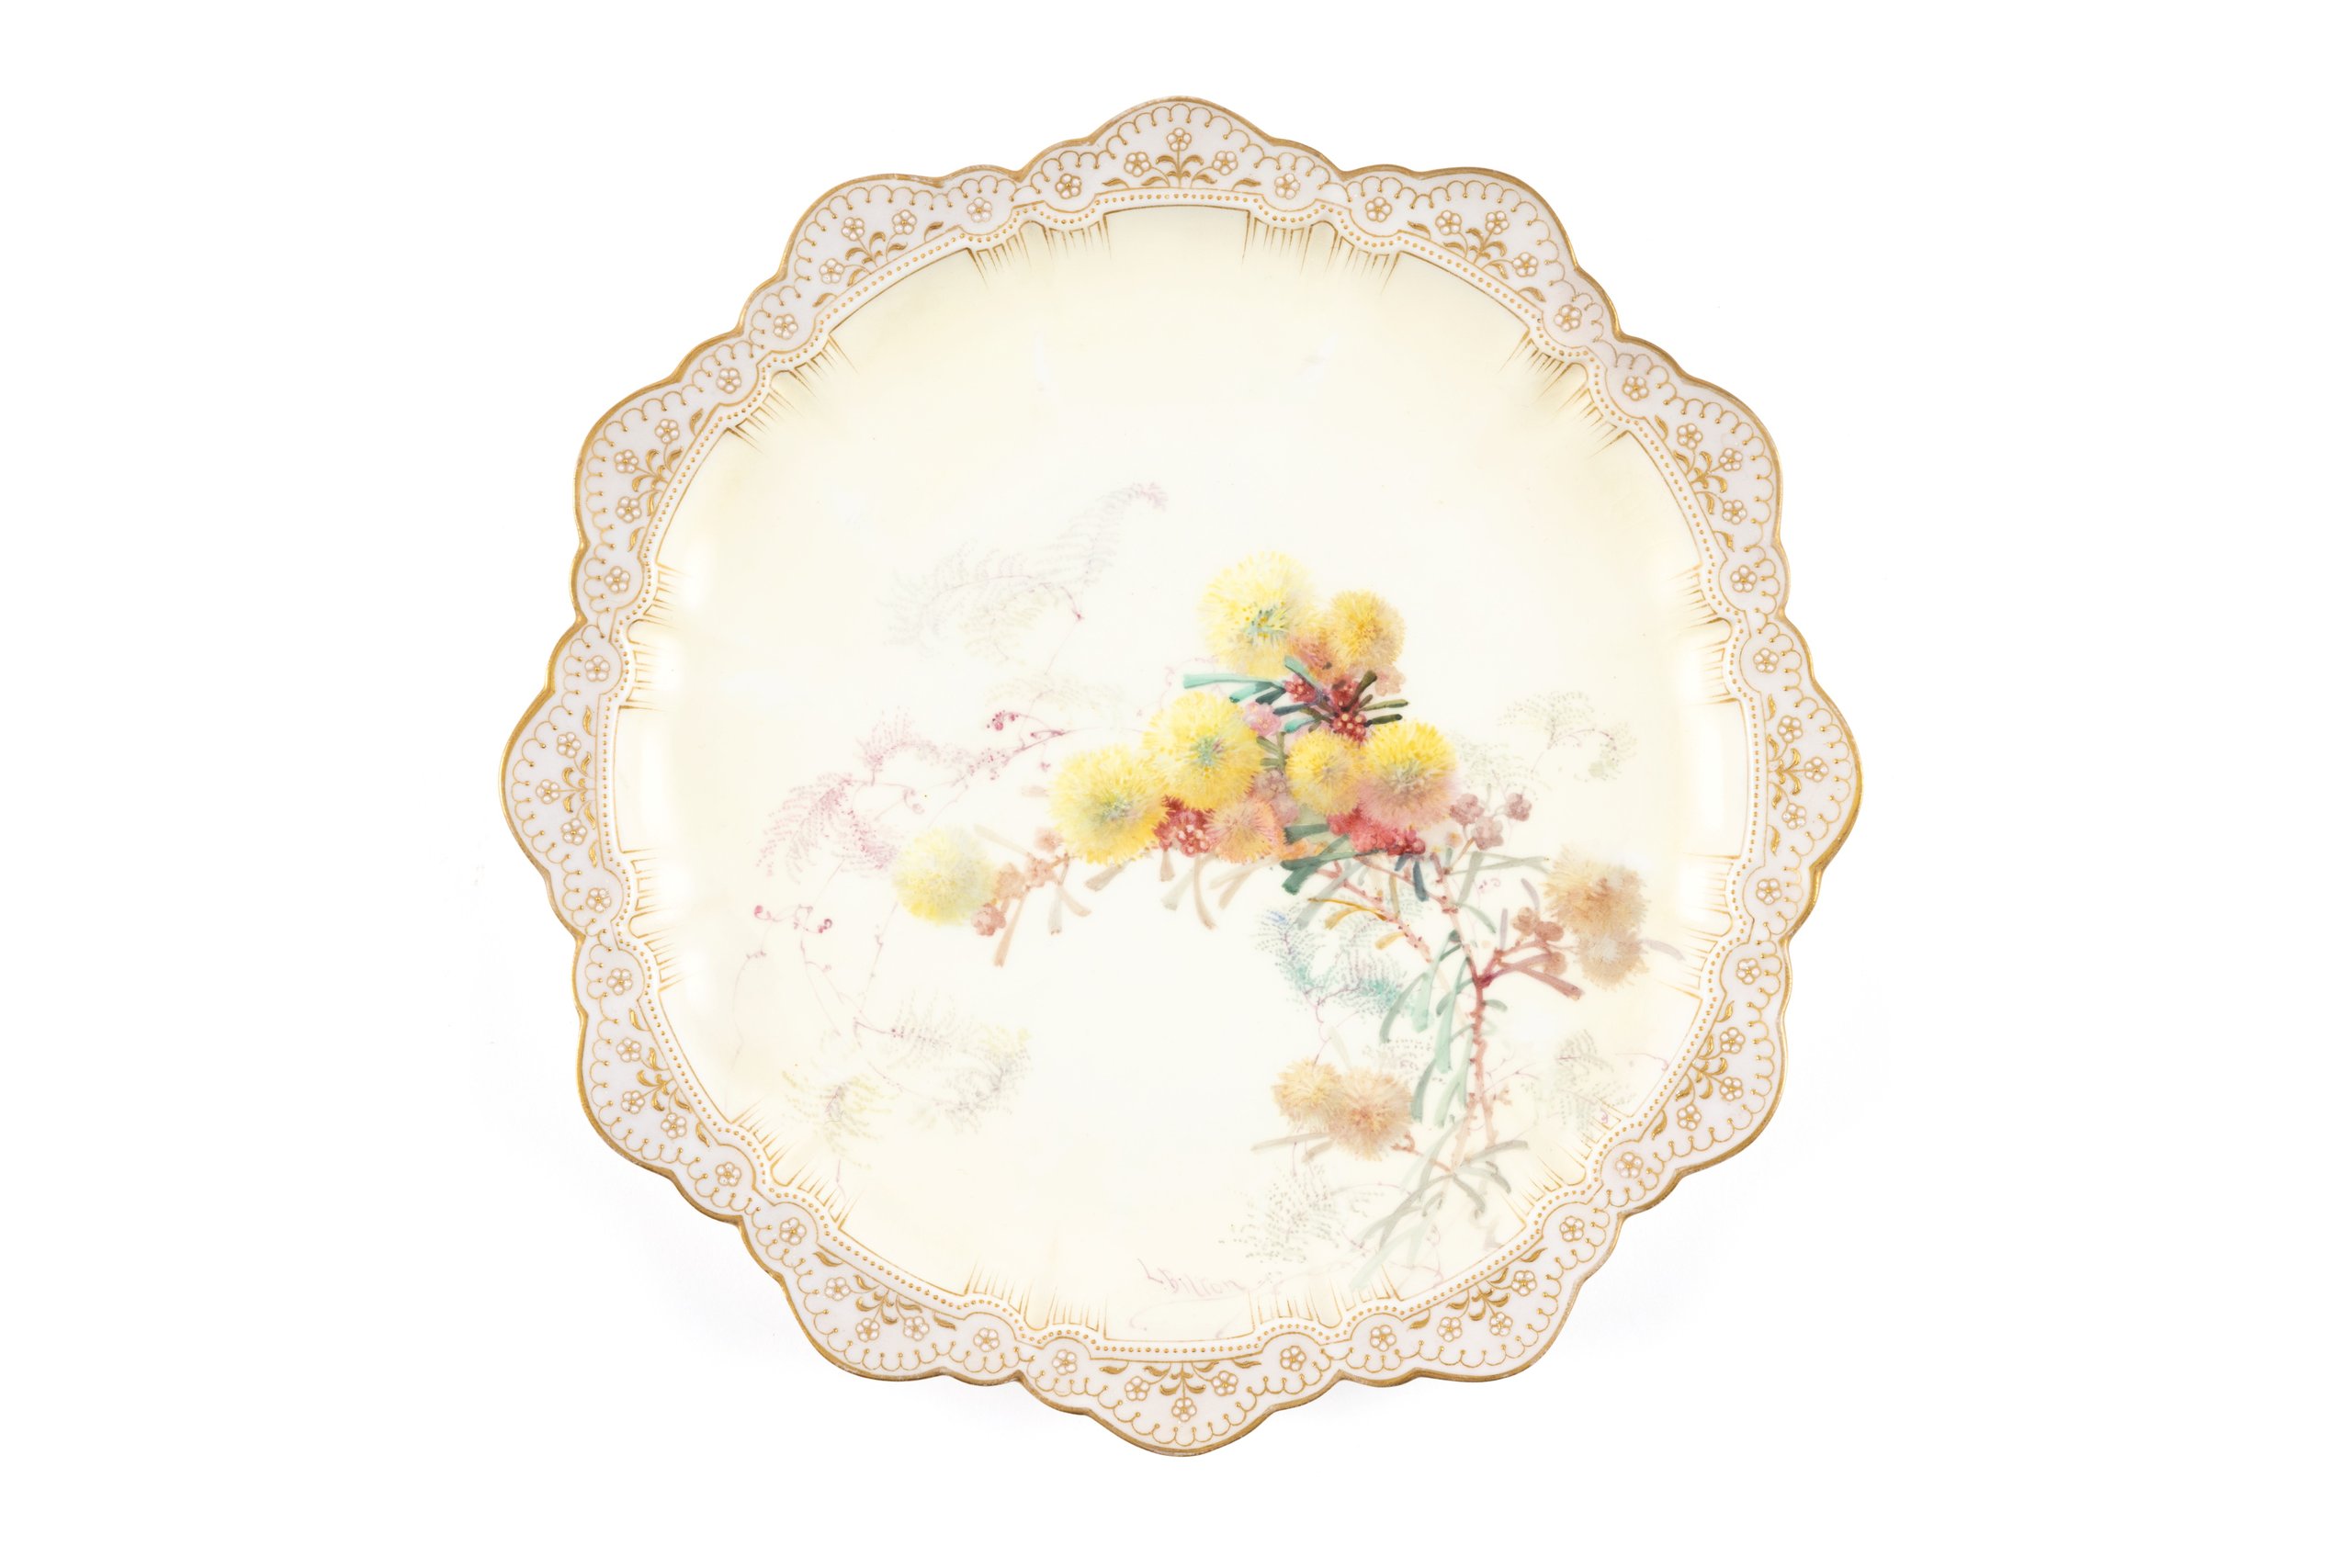 Doulton porcelain (bone china) plate painted by Louis Bilton with Australian wattle